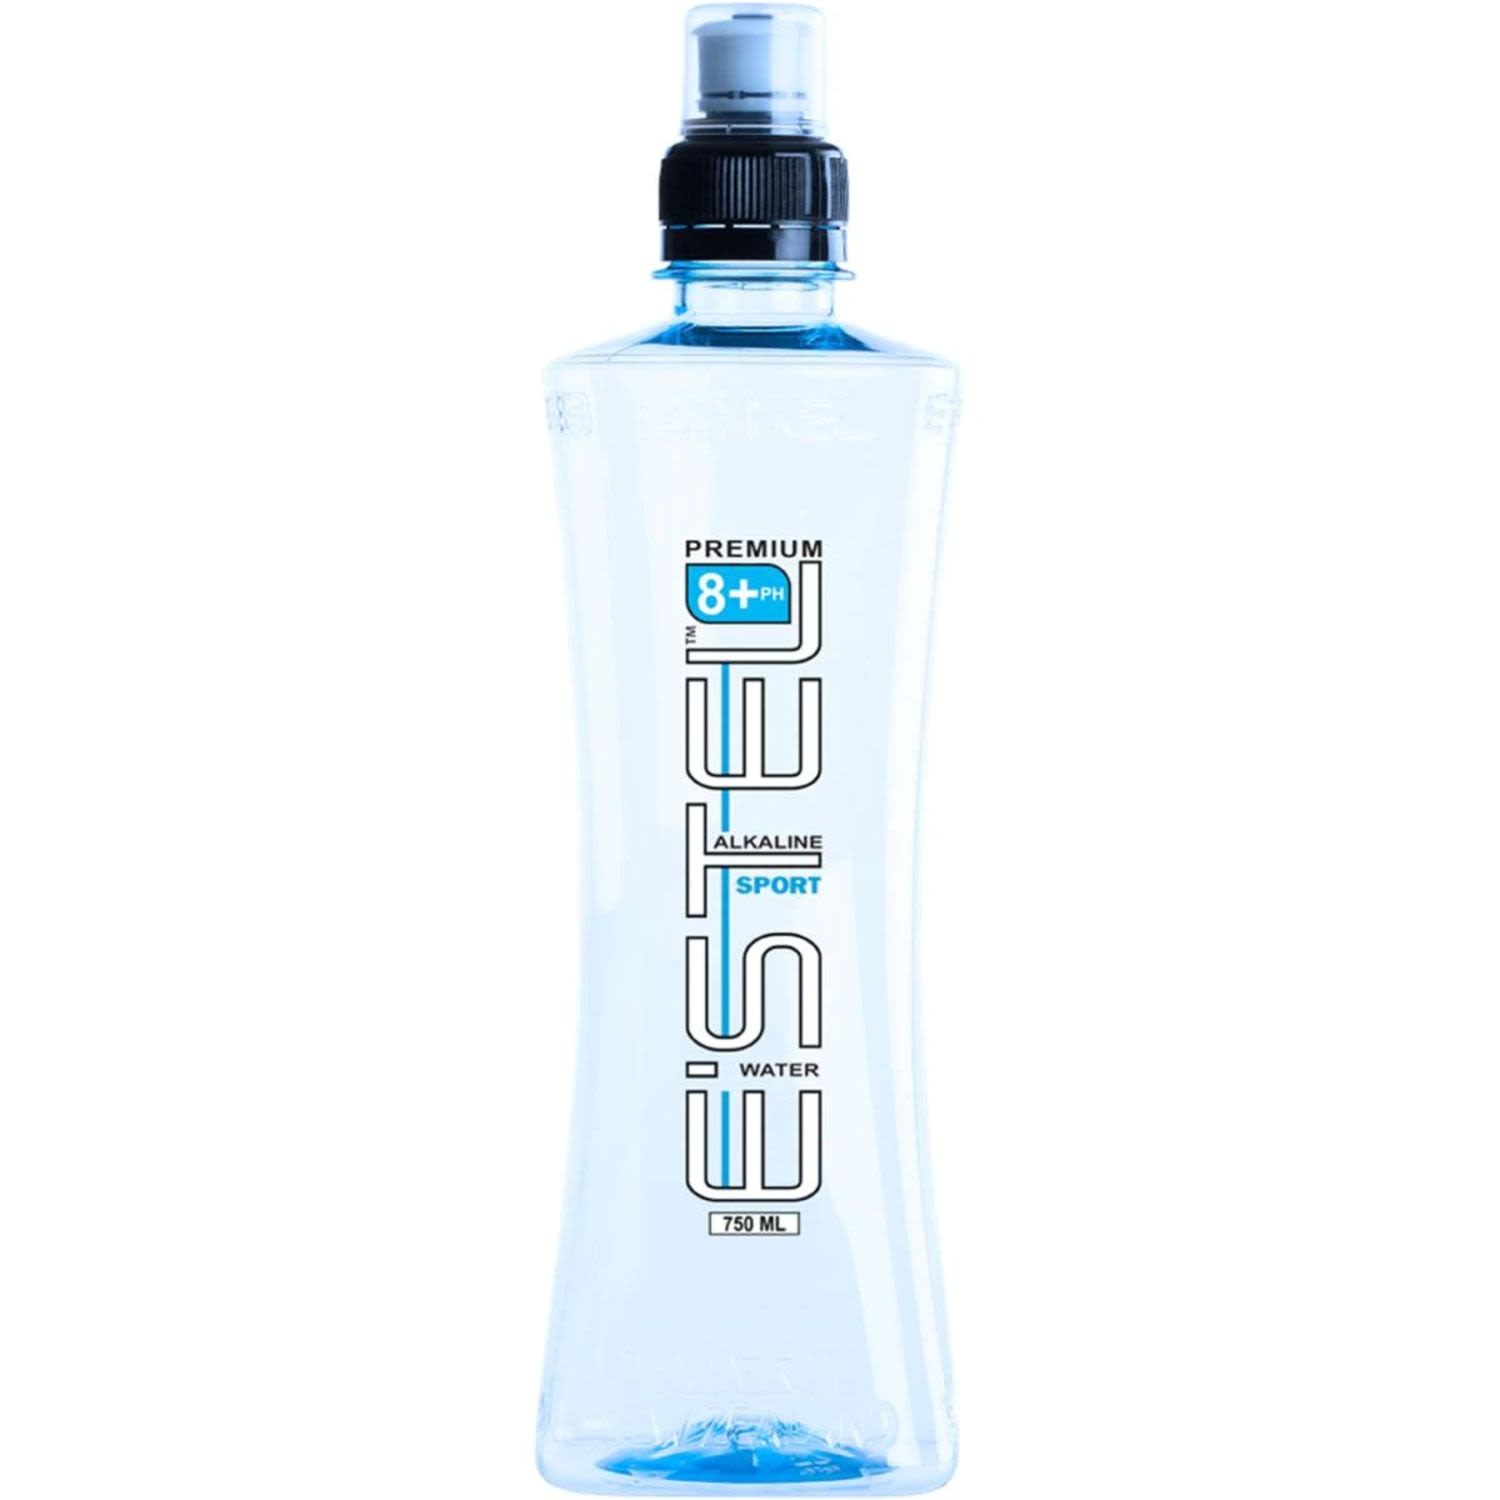 E'stel Premium Alkaline Sport Water, 750 Millilitre